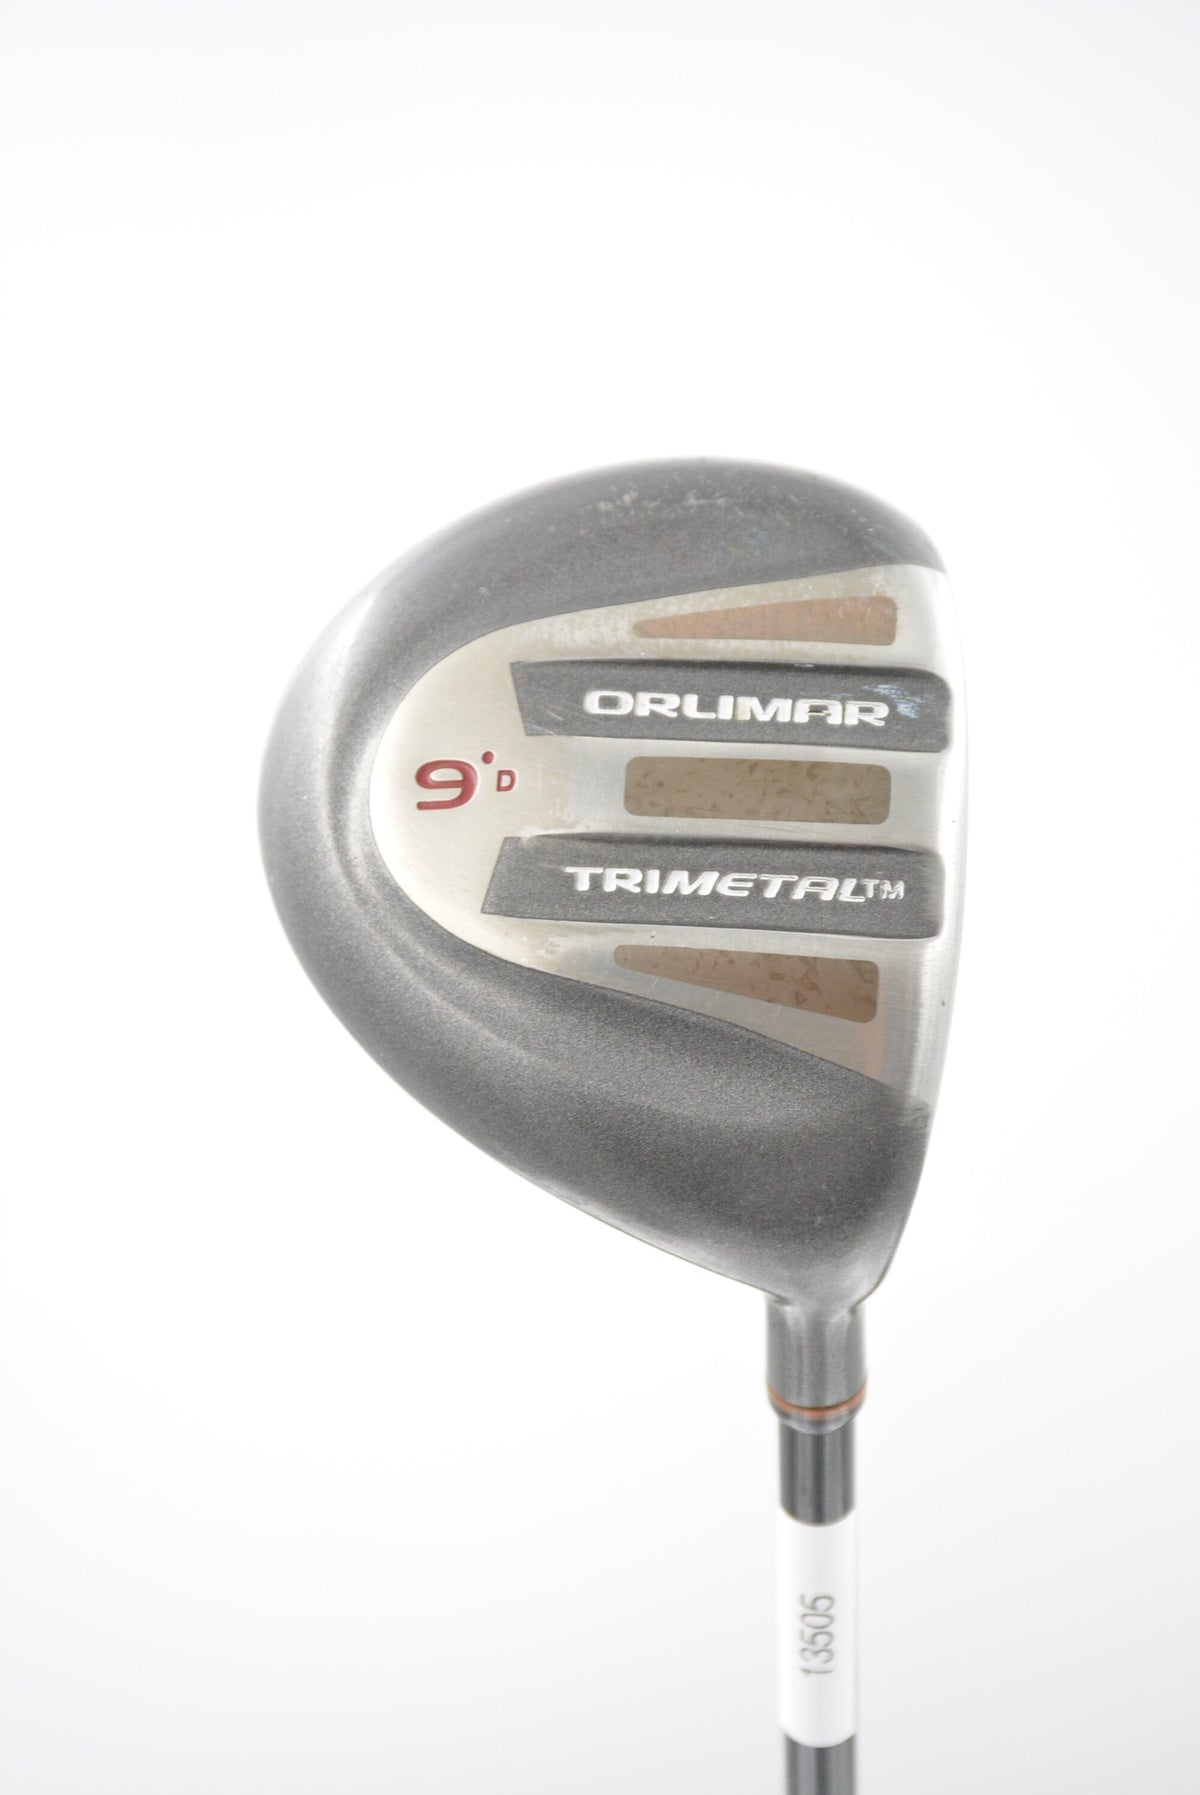 Orlimar Trimetal 9 Degree Driver SR Flex Golf Clubs GolfRoots 